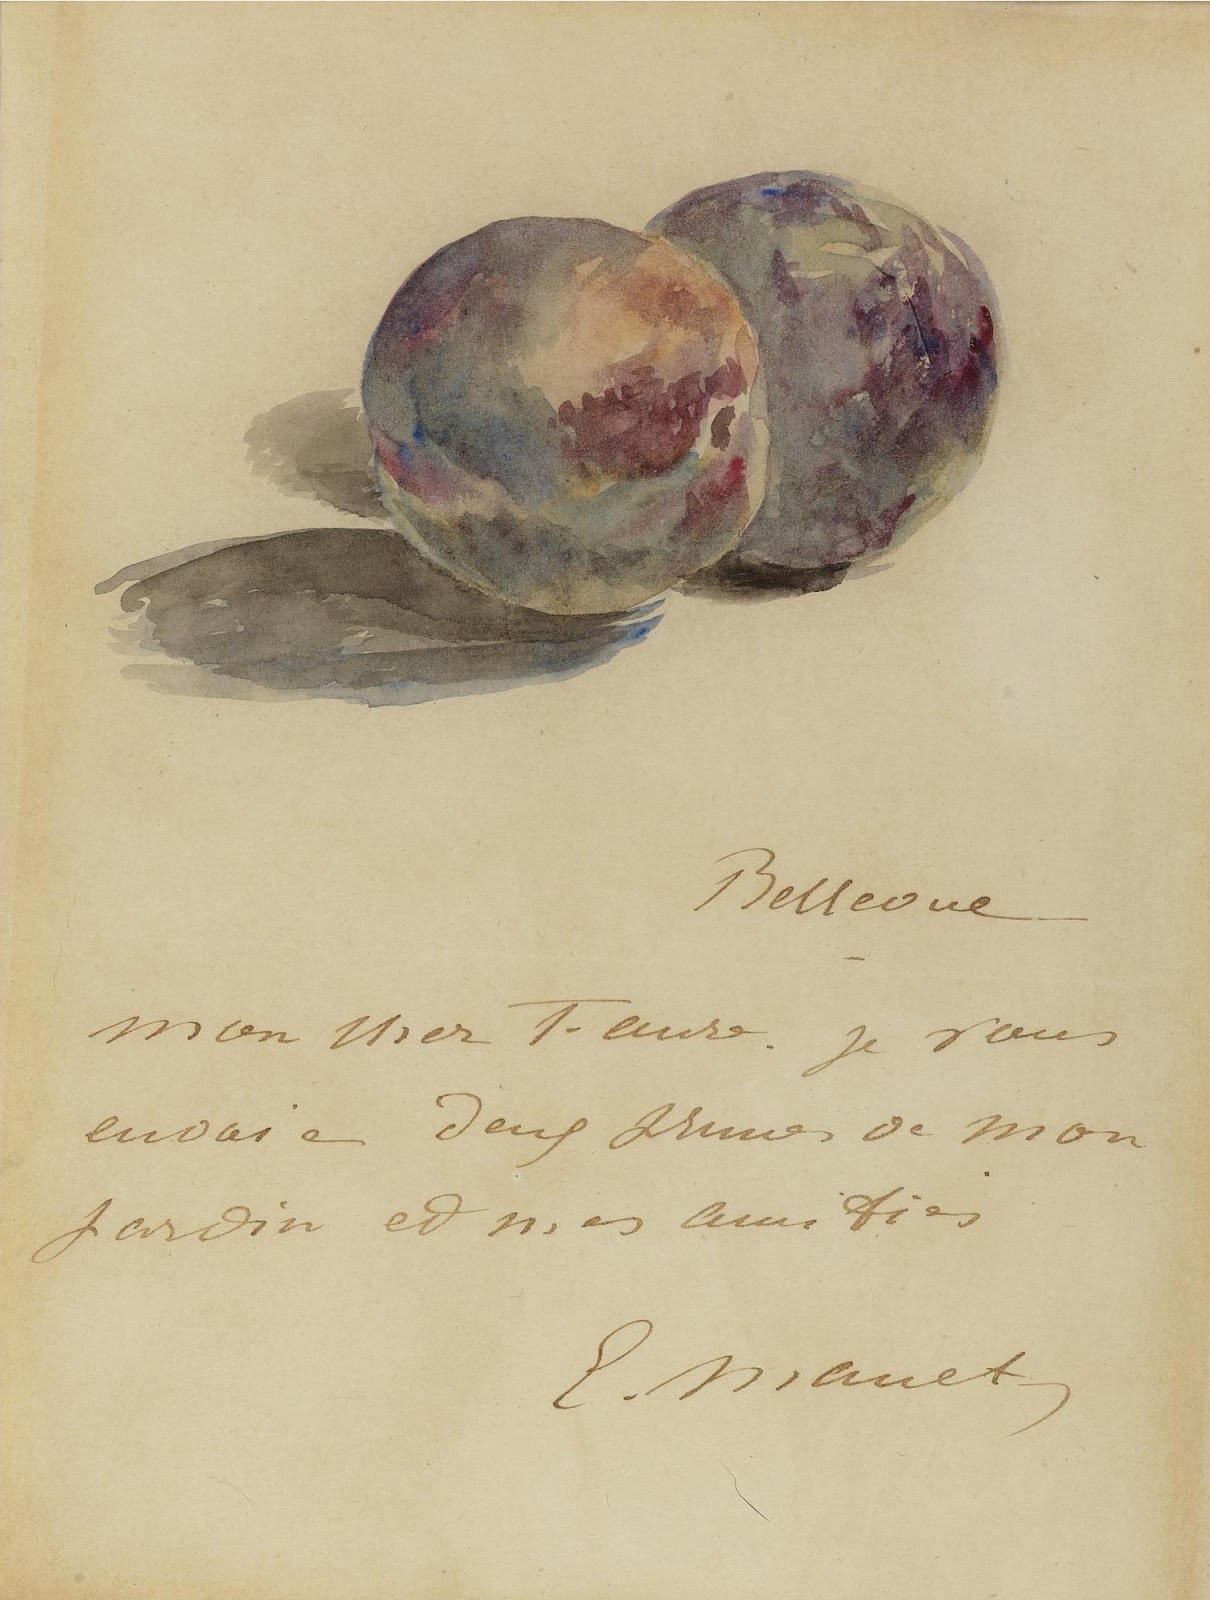 Edouard+Manet-1832-1883 (118).jpg